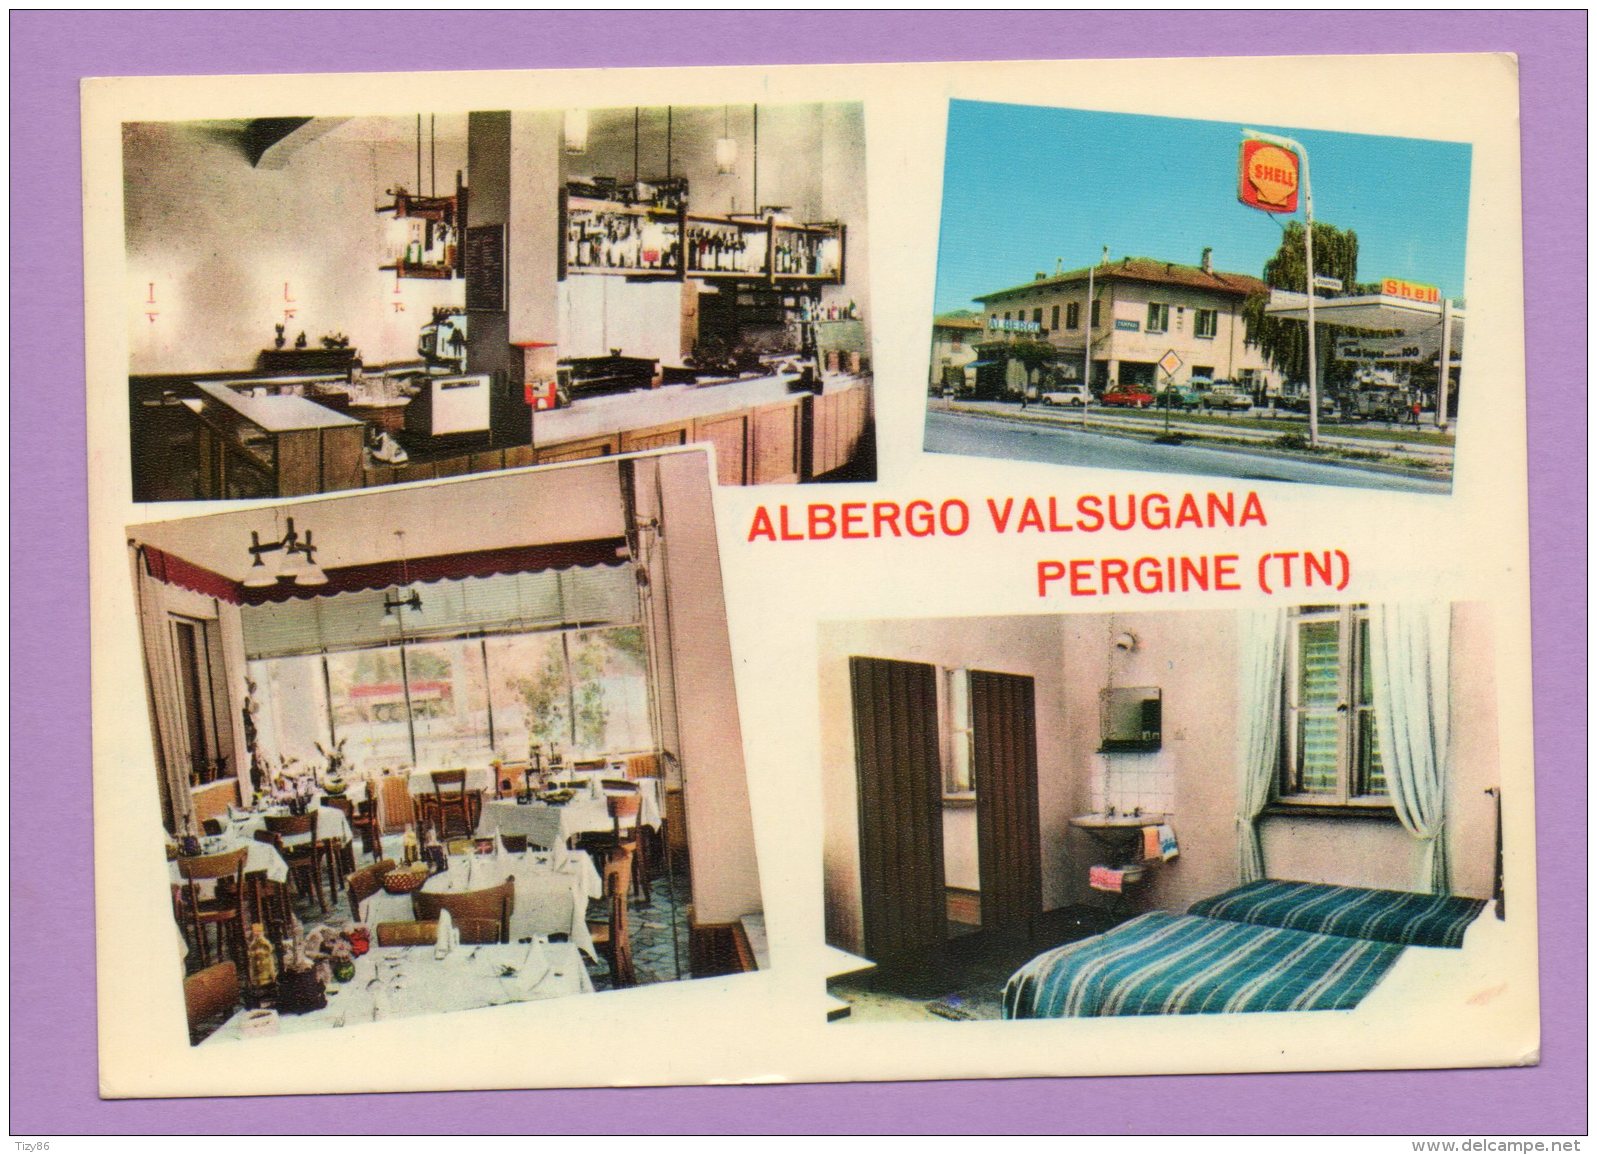 Albergo Valsugana Pergine (TN) - Hotels & Restaurants